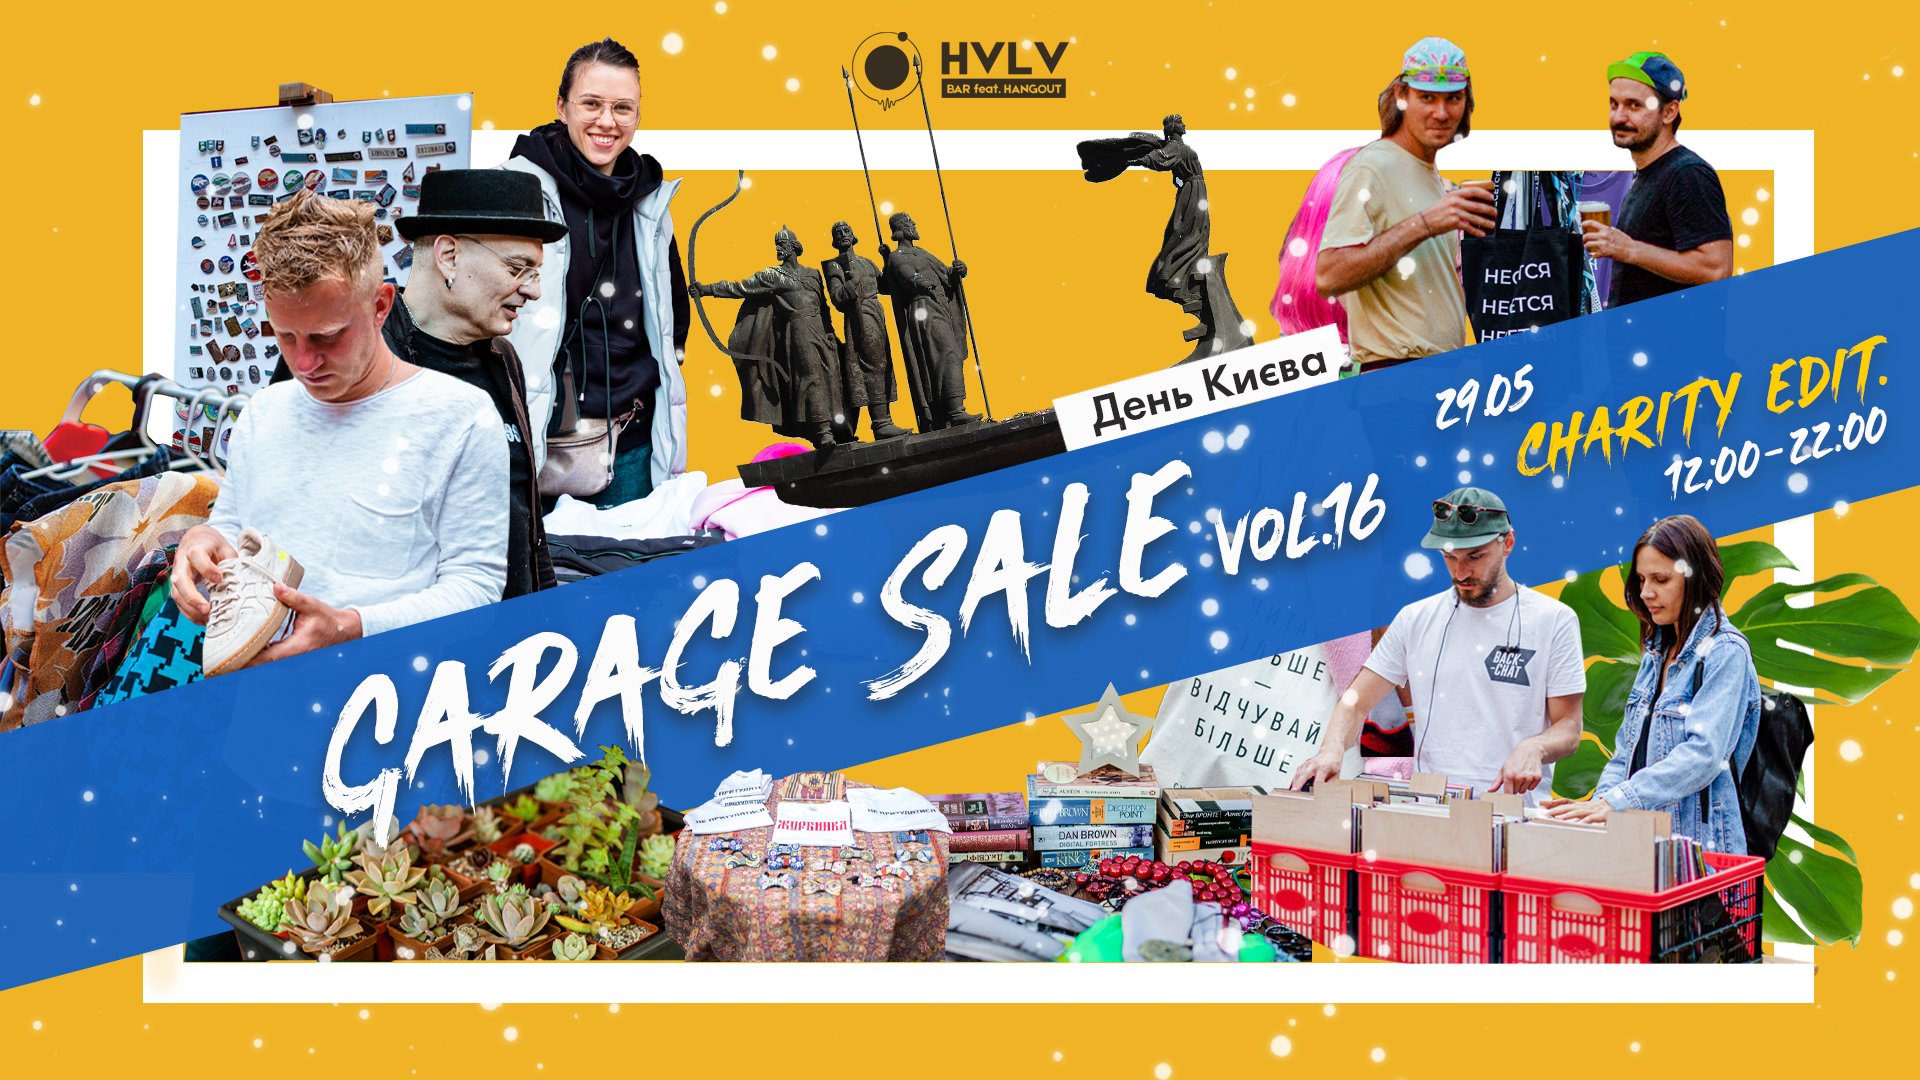 Garage Sale Vol.16 Charity edition